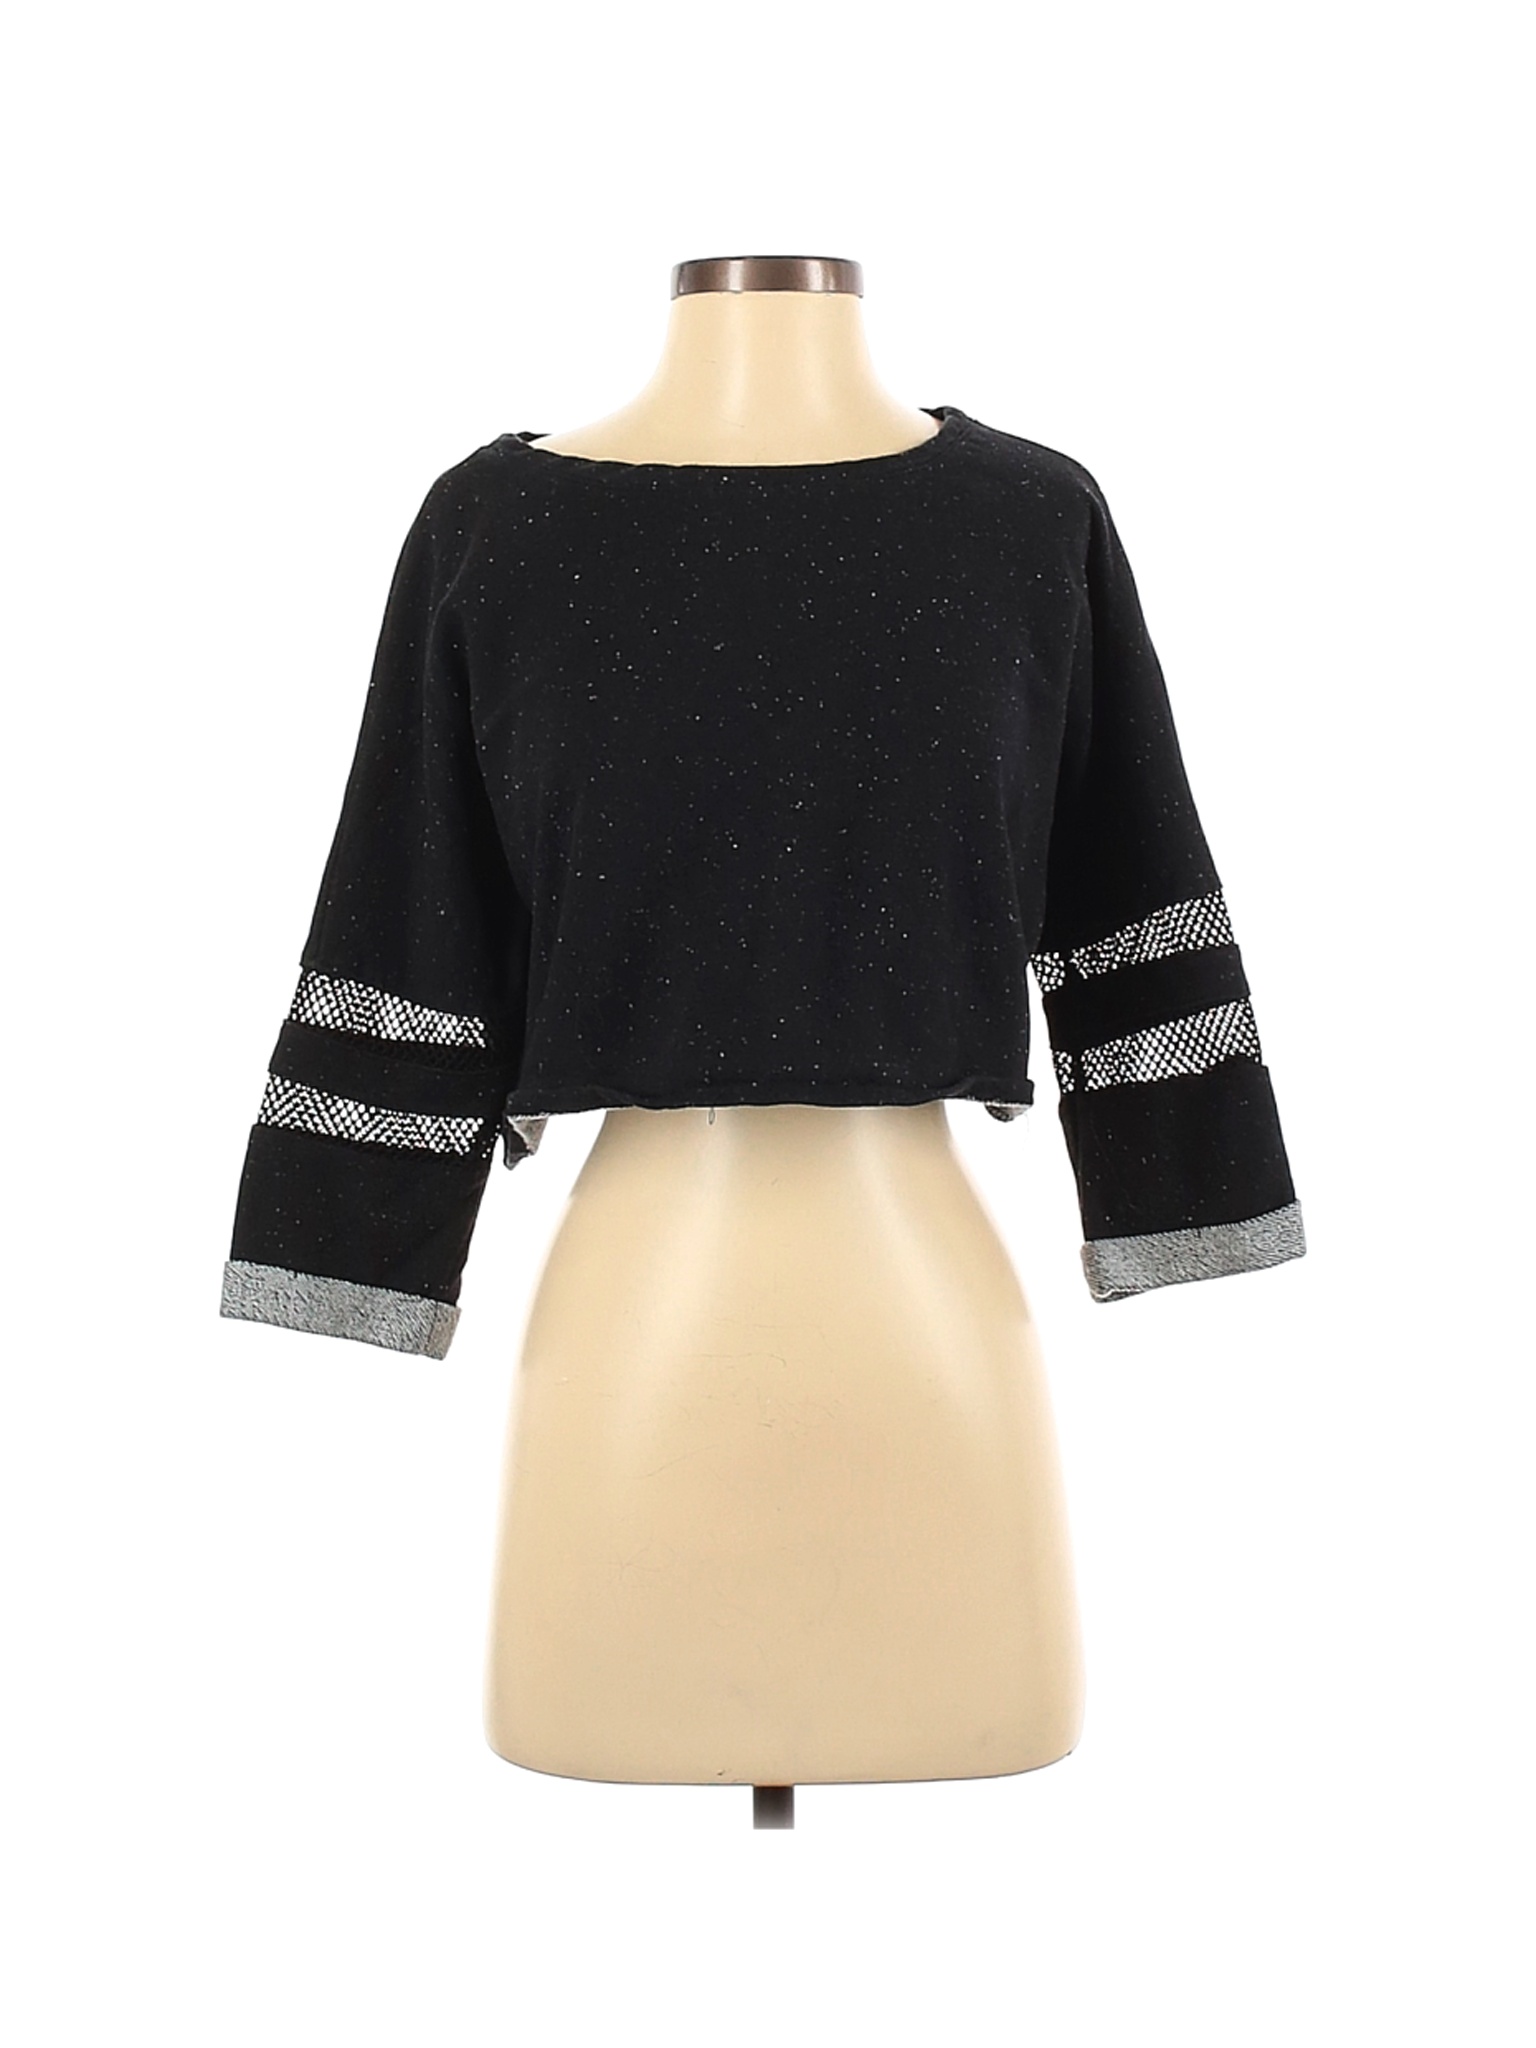 Ambiance Women Black Sweatshirt S | eBay